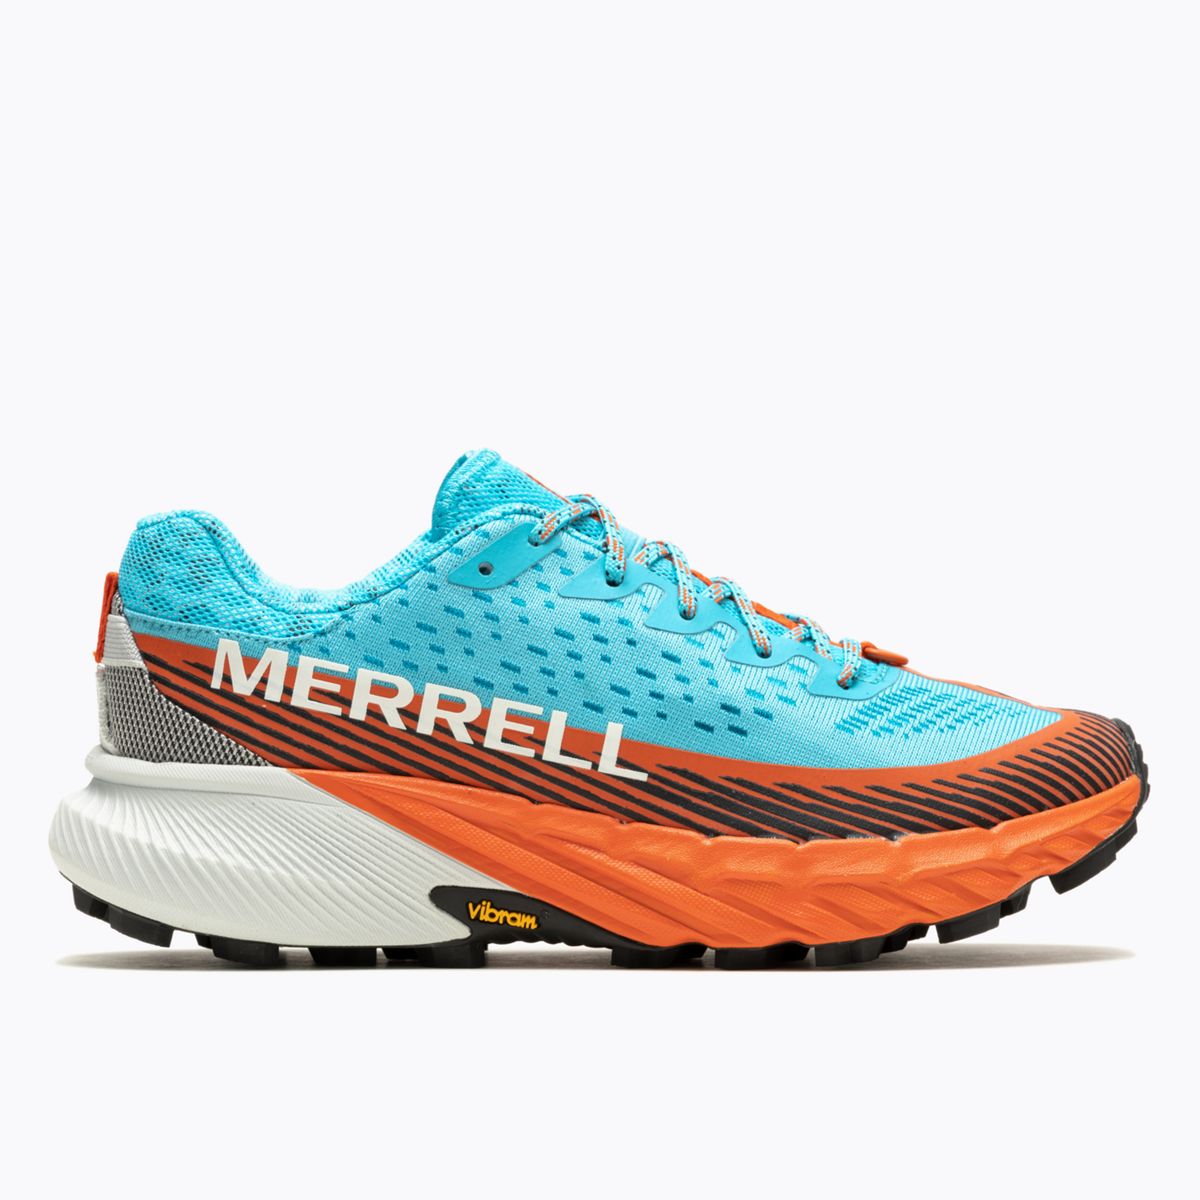 Merrell Agility Peak 4 Shoes - Women's, Trailrunning Shoes